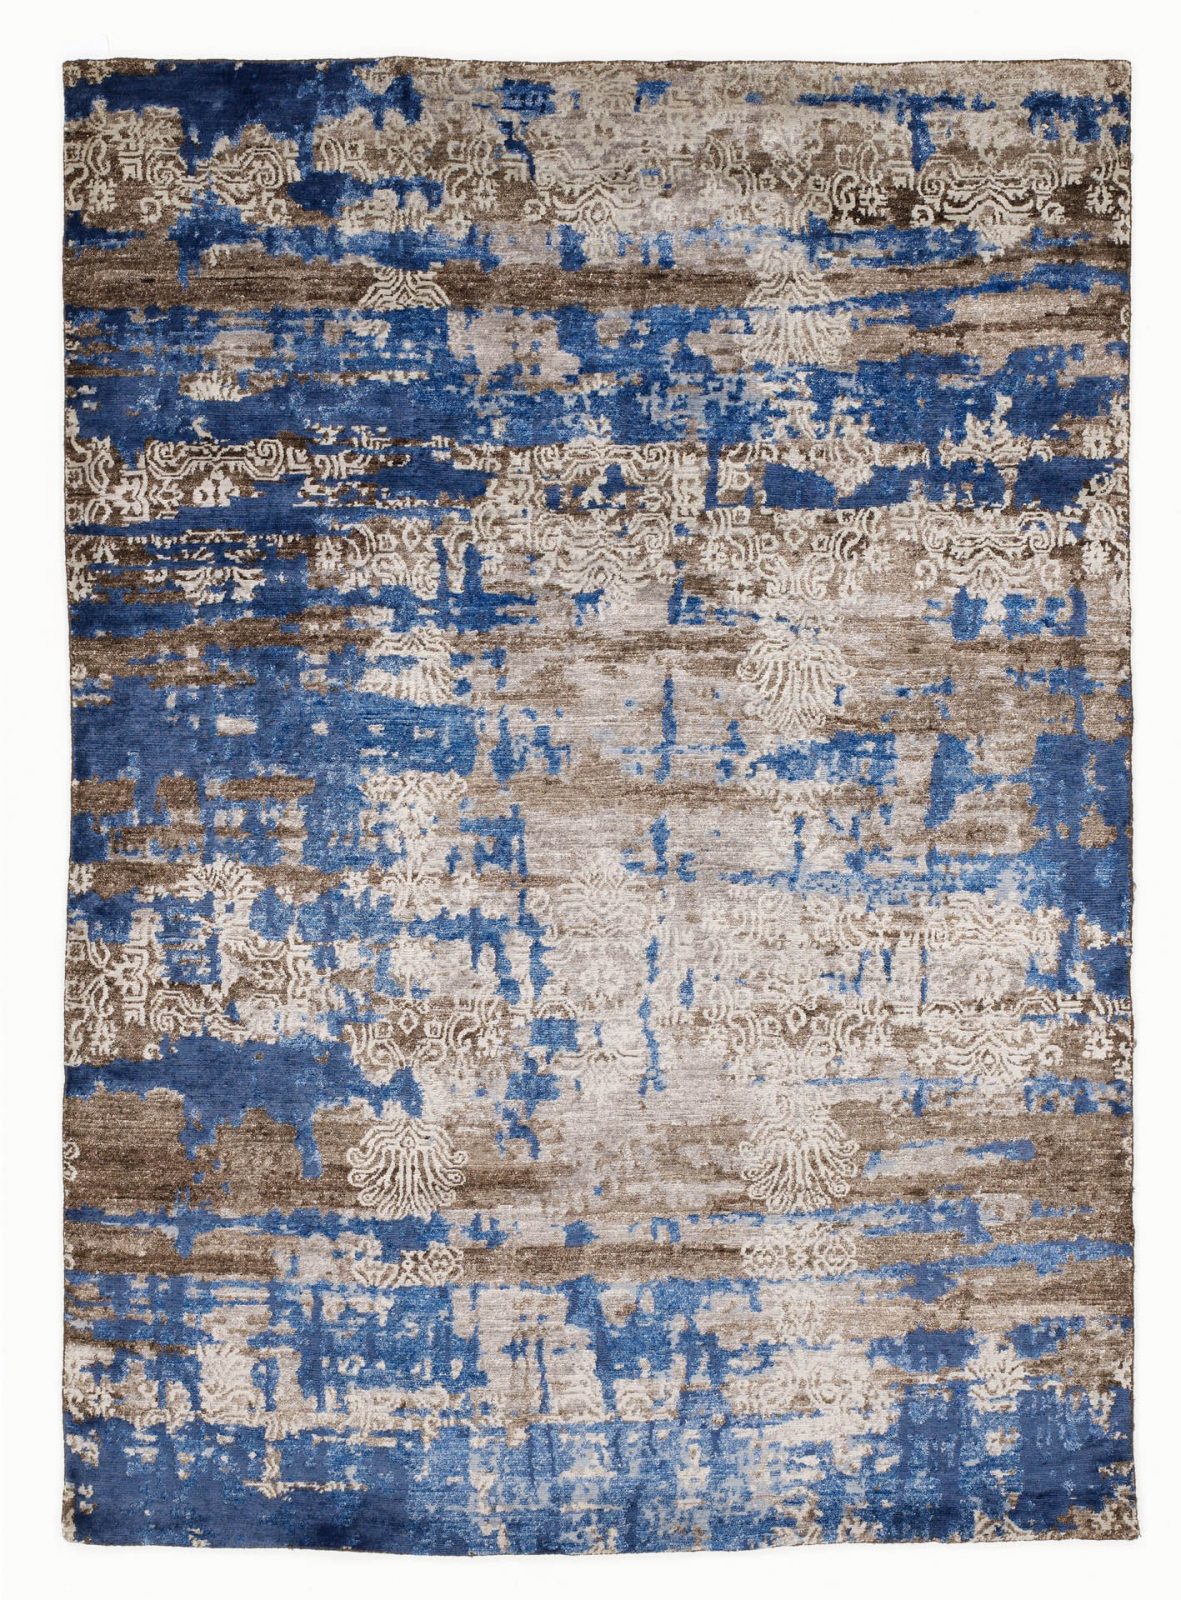 » Kollektion, Signature braun-blau Teppiche, HALL Teppich-Welt Fusion